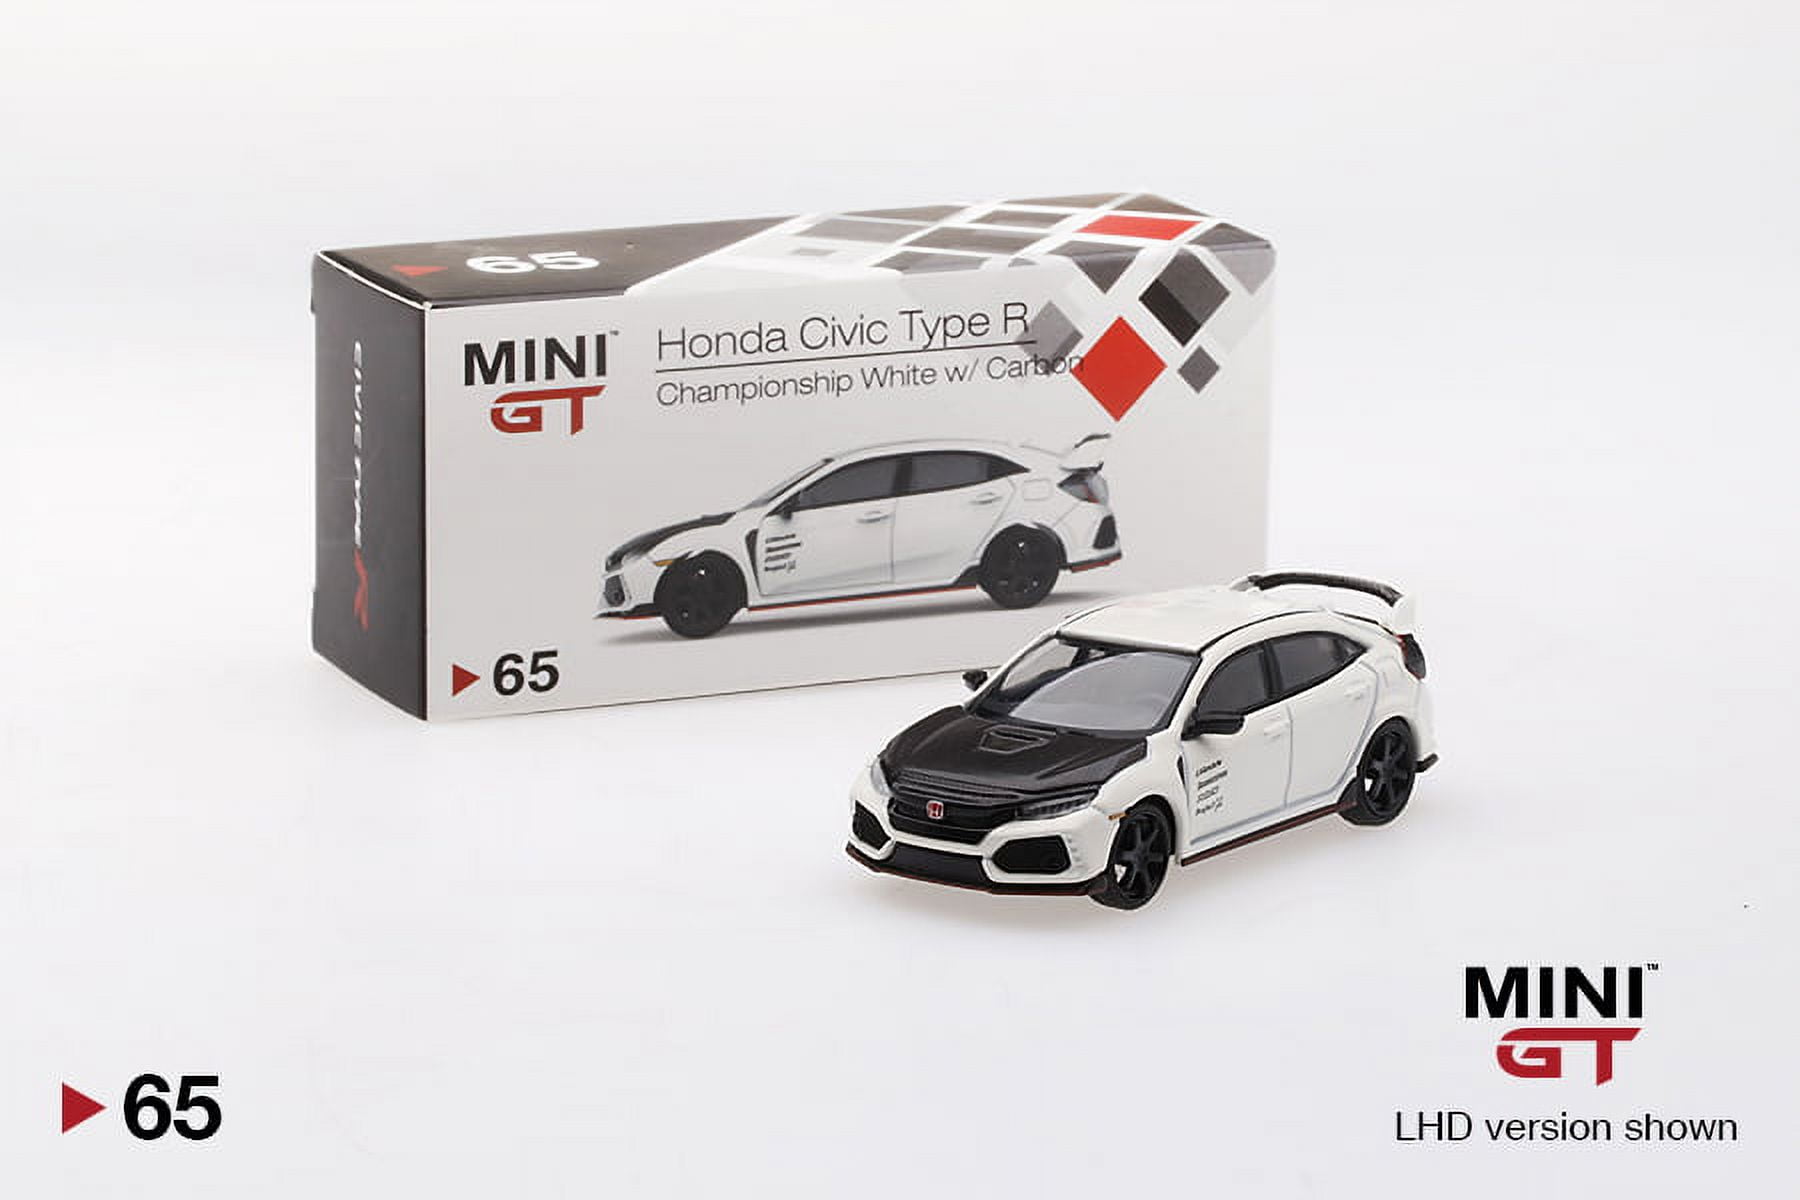  MINI GT True Scale Miniatures Model Car Compatible